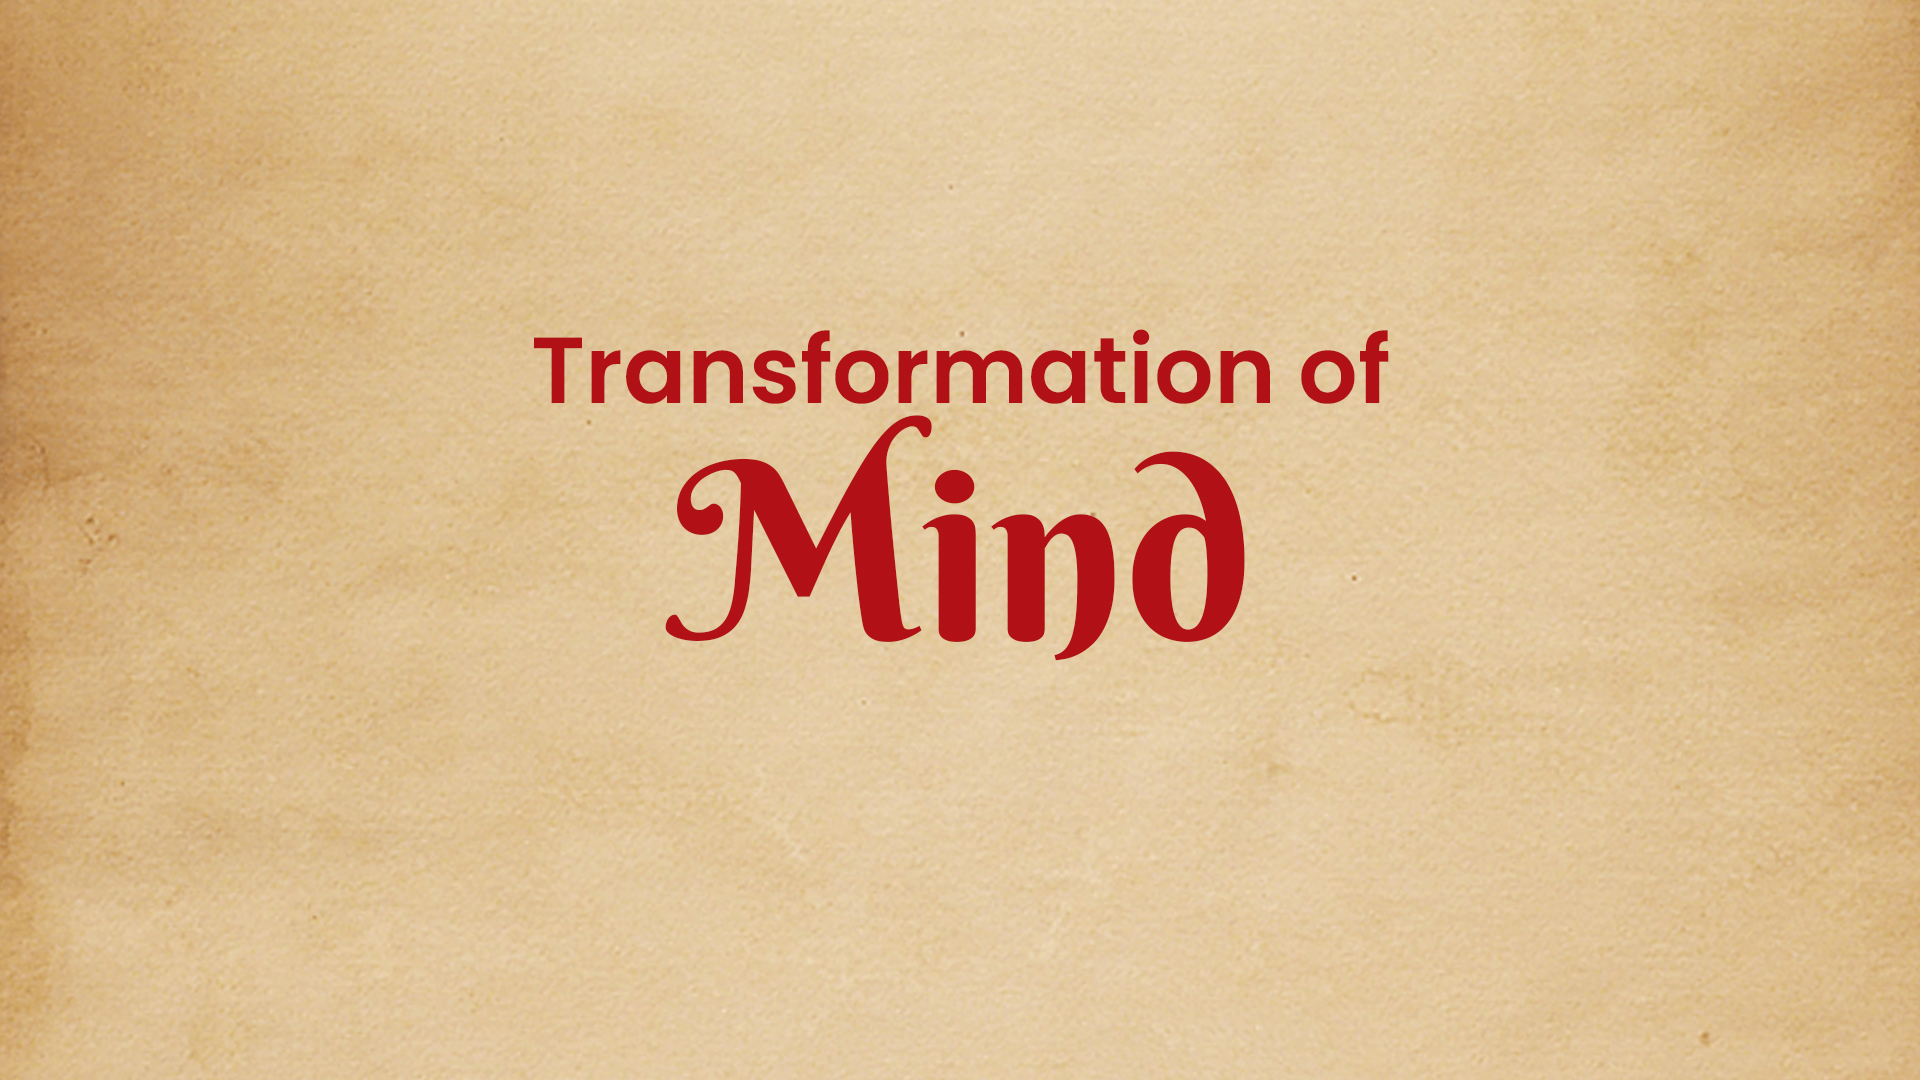 Transformation of Mind